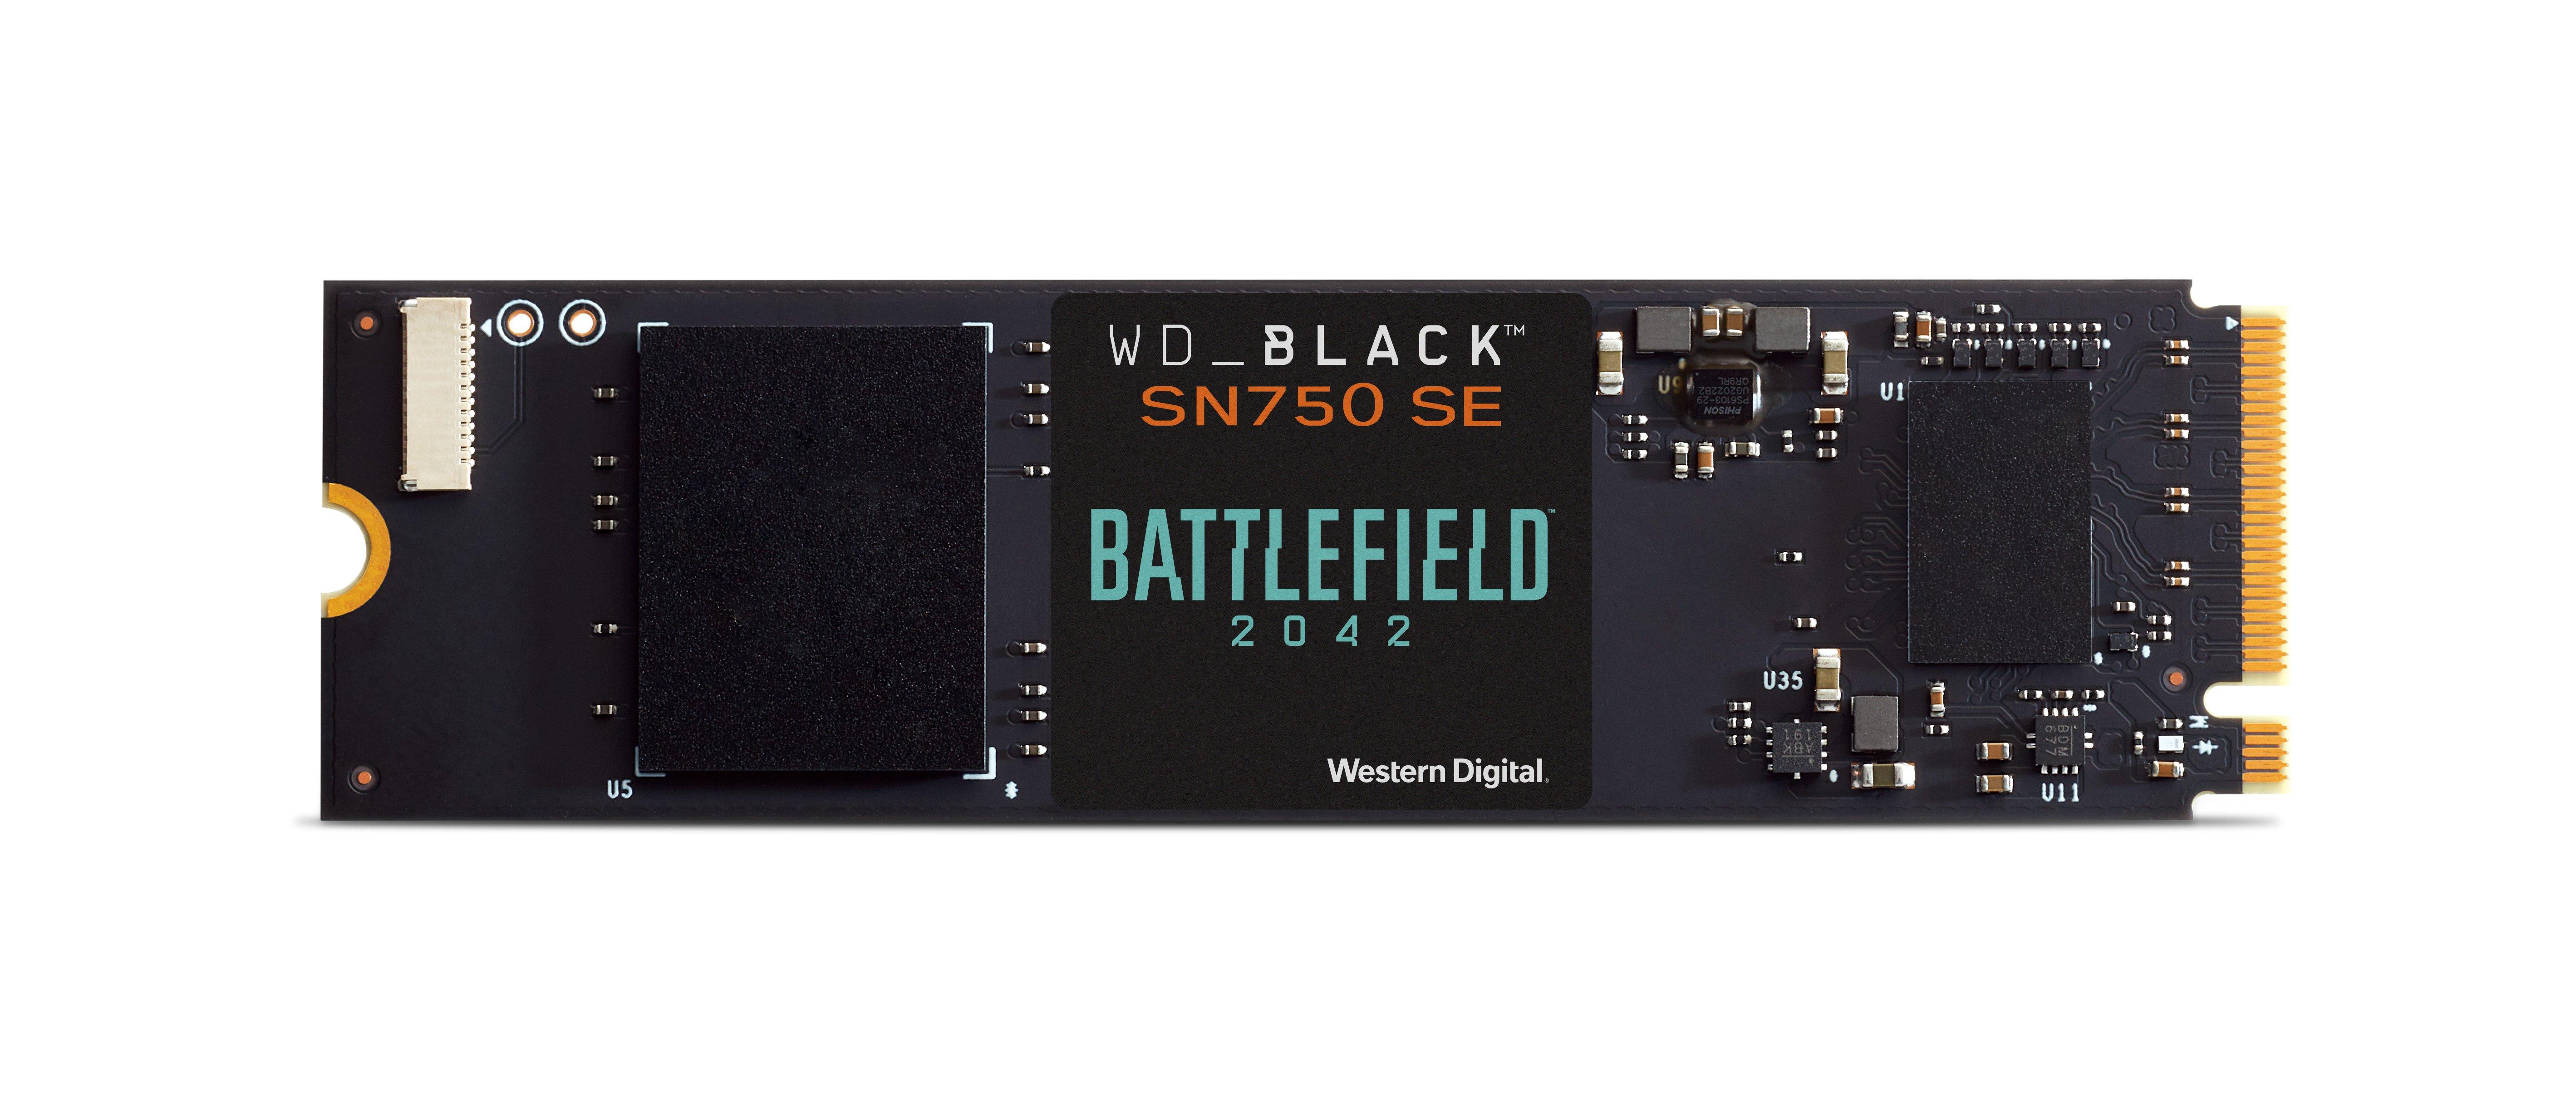 500GB WD_BLACK SN750 SE PCIe Gen4 M.2 2280 NVMe SSD + Battlefield 2042 Game Bundle @ $44.98 + F/S